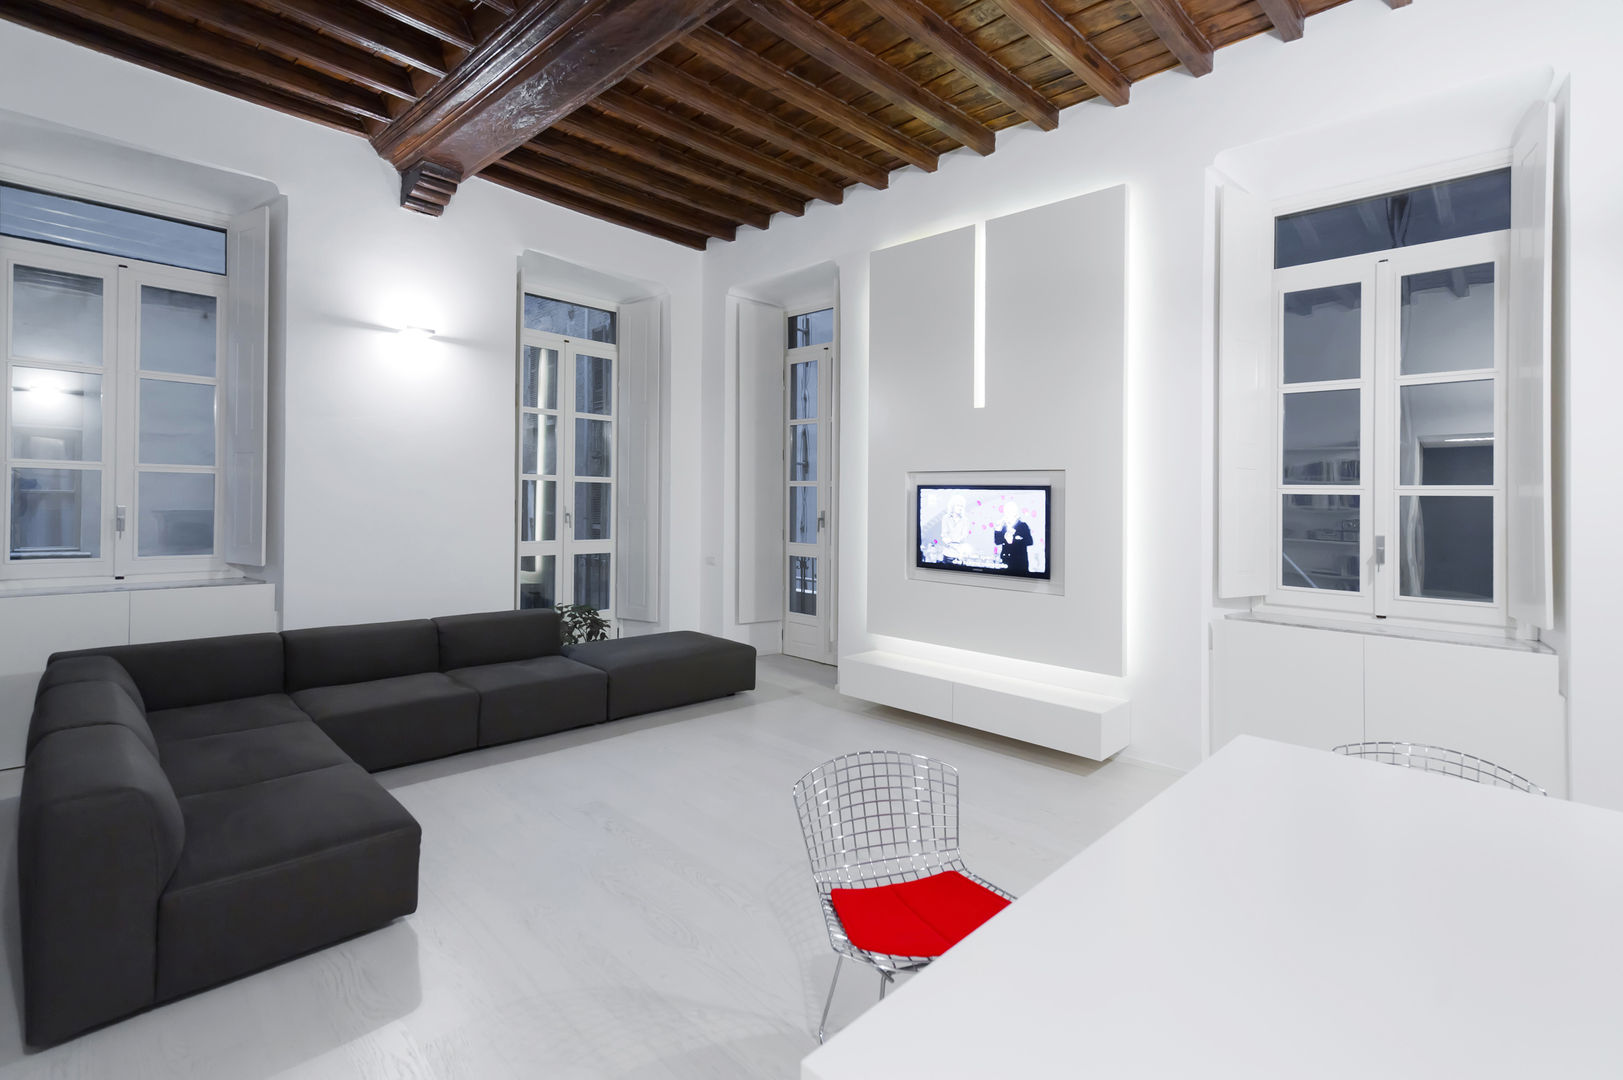 U:BA house, Comoglio Architetti Comoglio Architetti Ruang keluarga: Ide desain interior, inspirasi & gambar